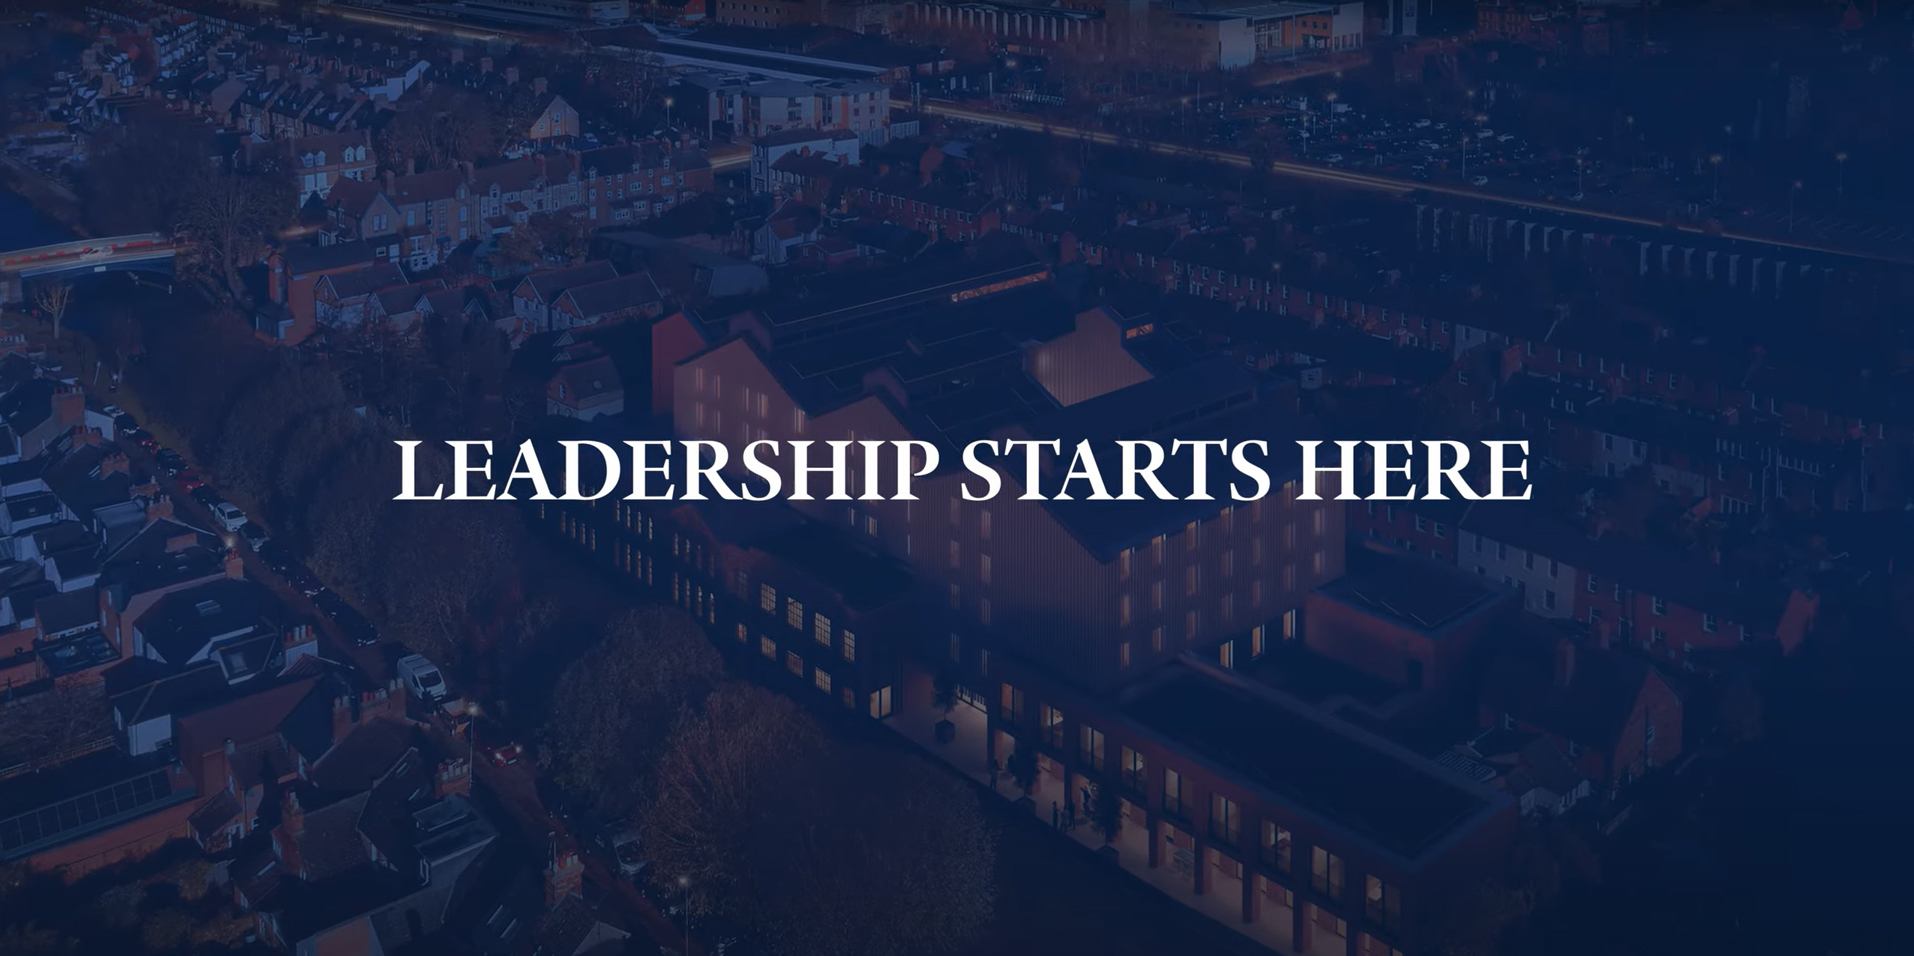 Leadership starts here